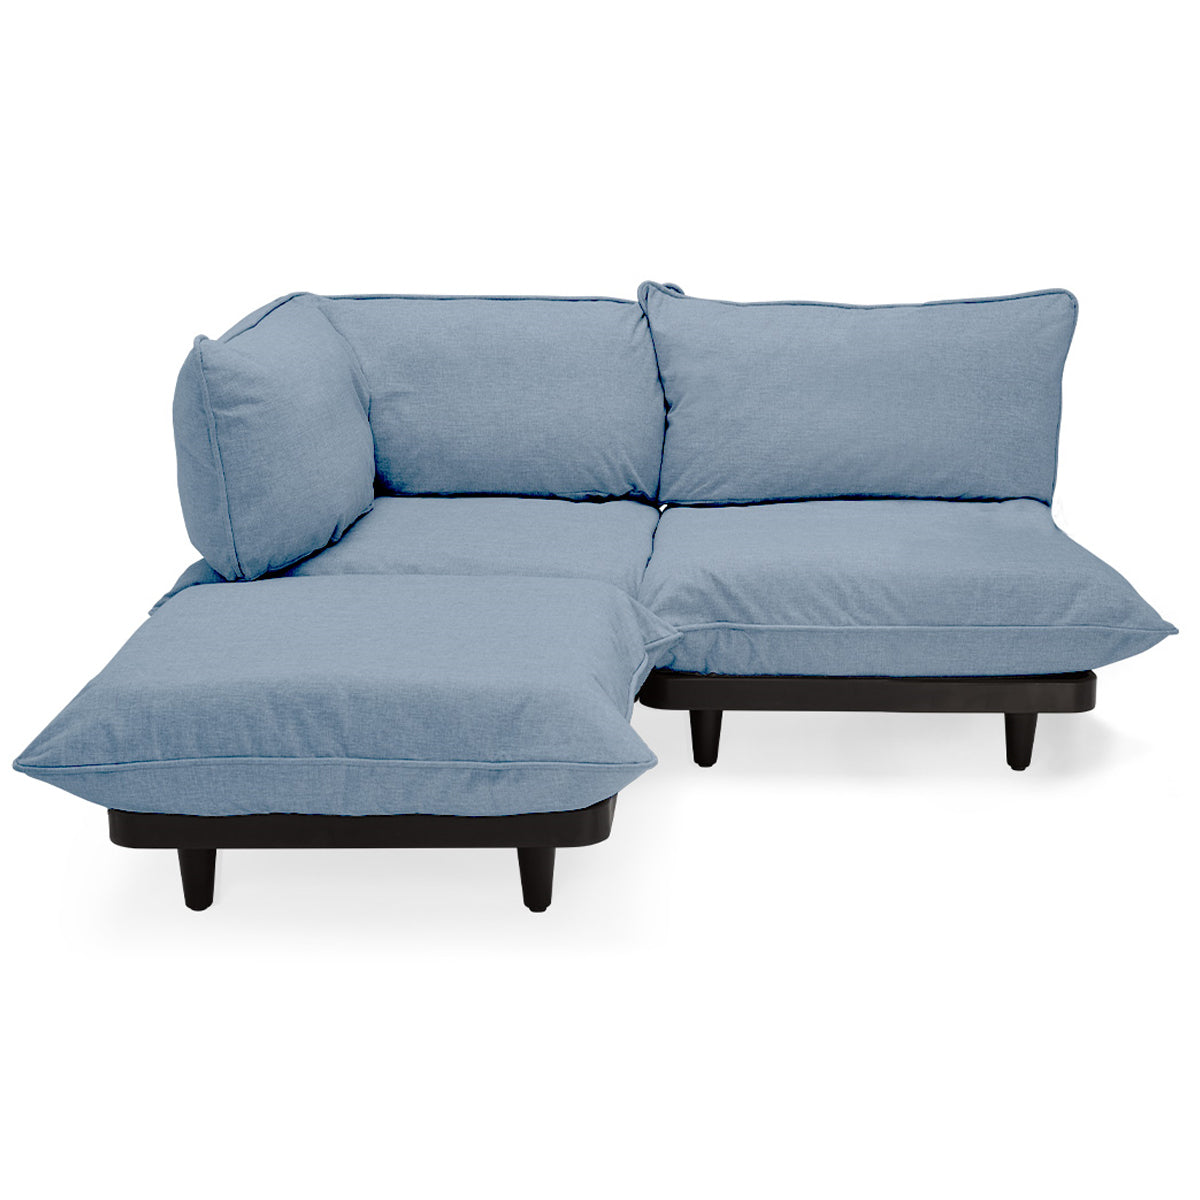 Paletti Lounge Furniture Set Medium - Fatboy